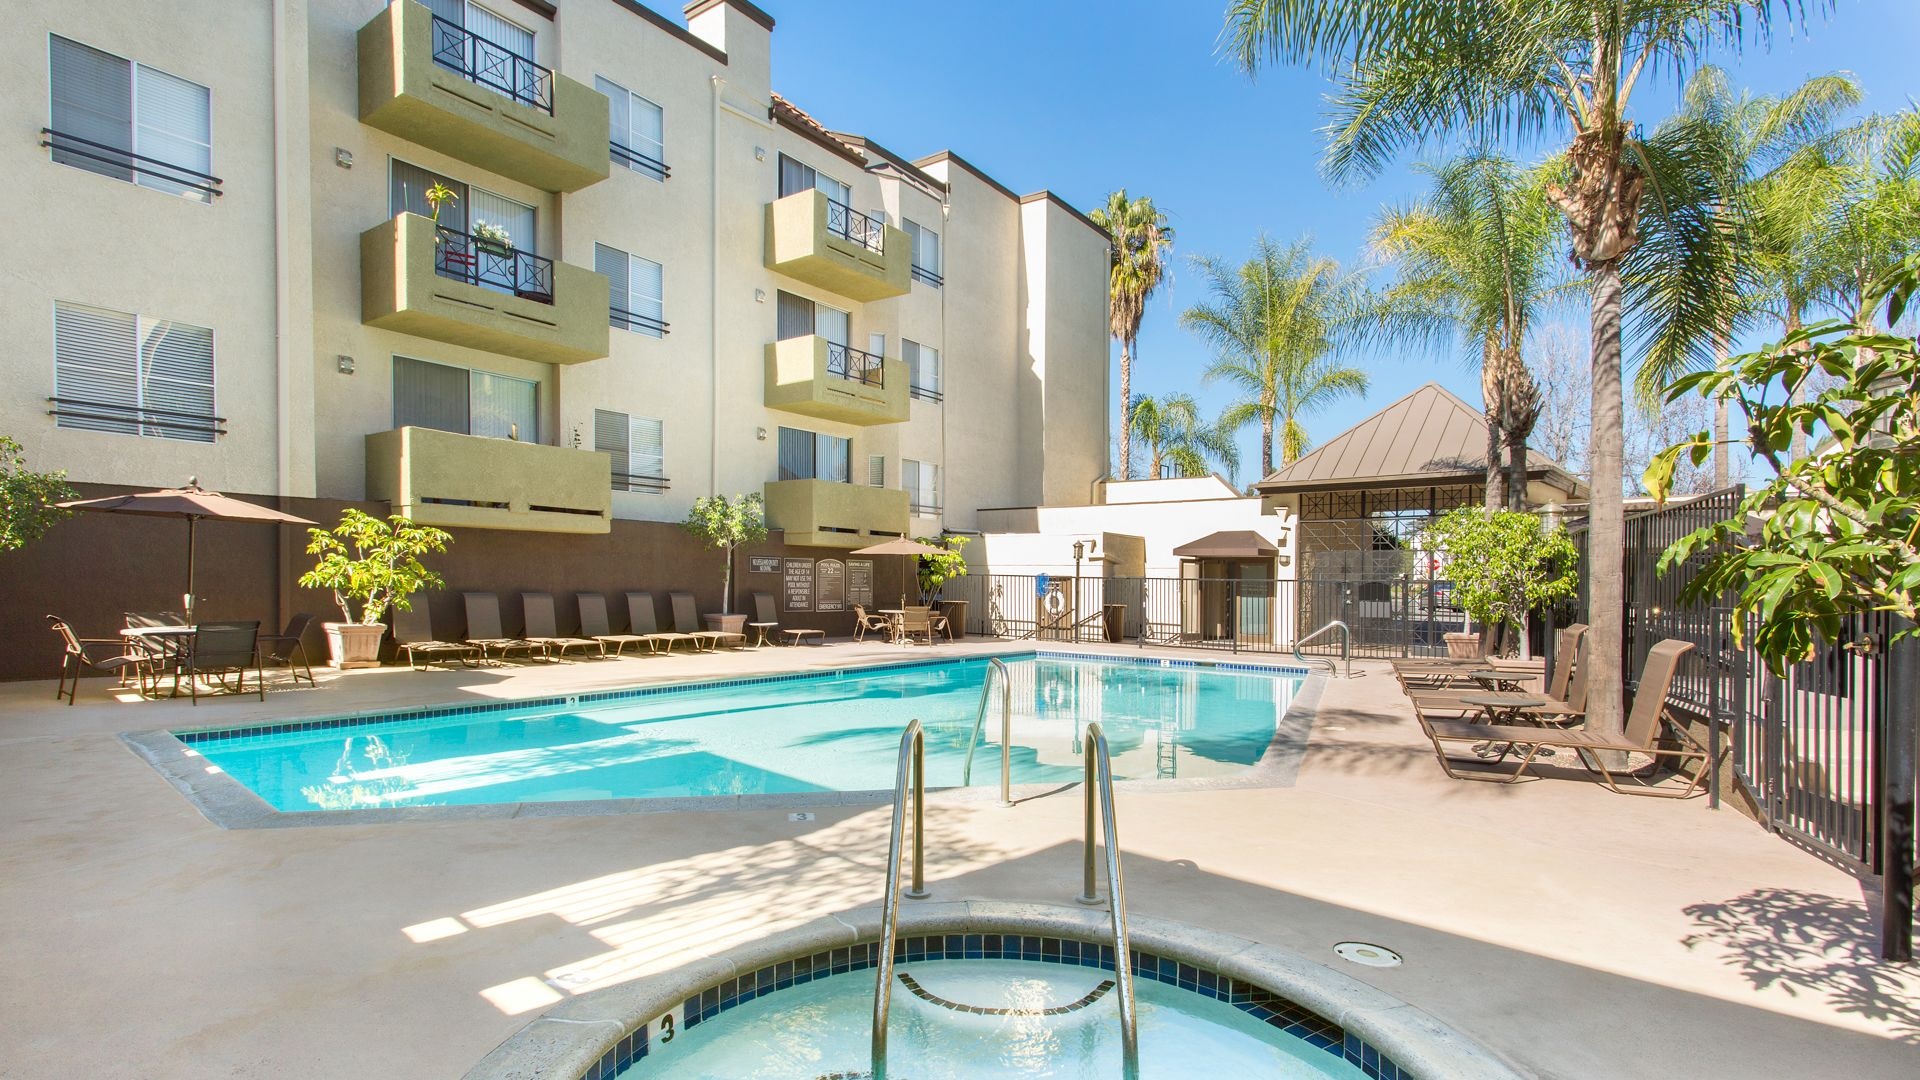 Tourists can take advantage of the apartments in LA California